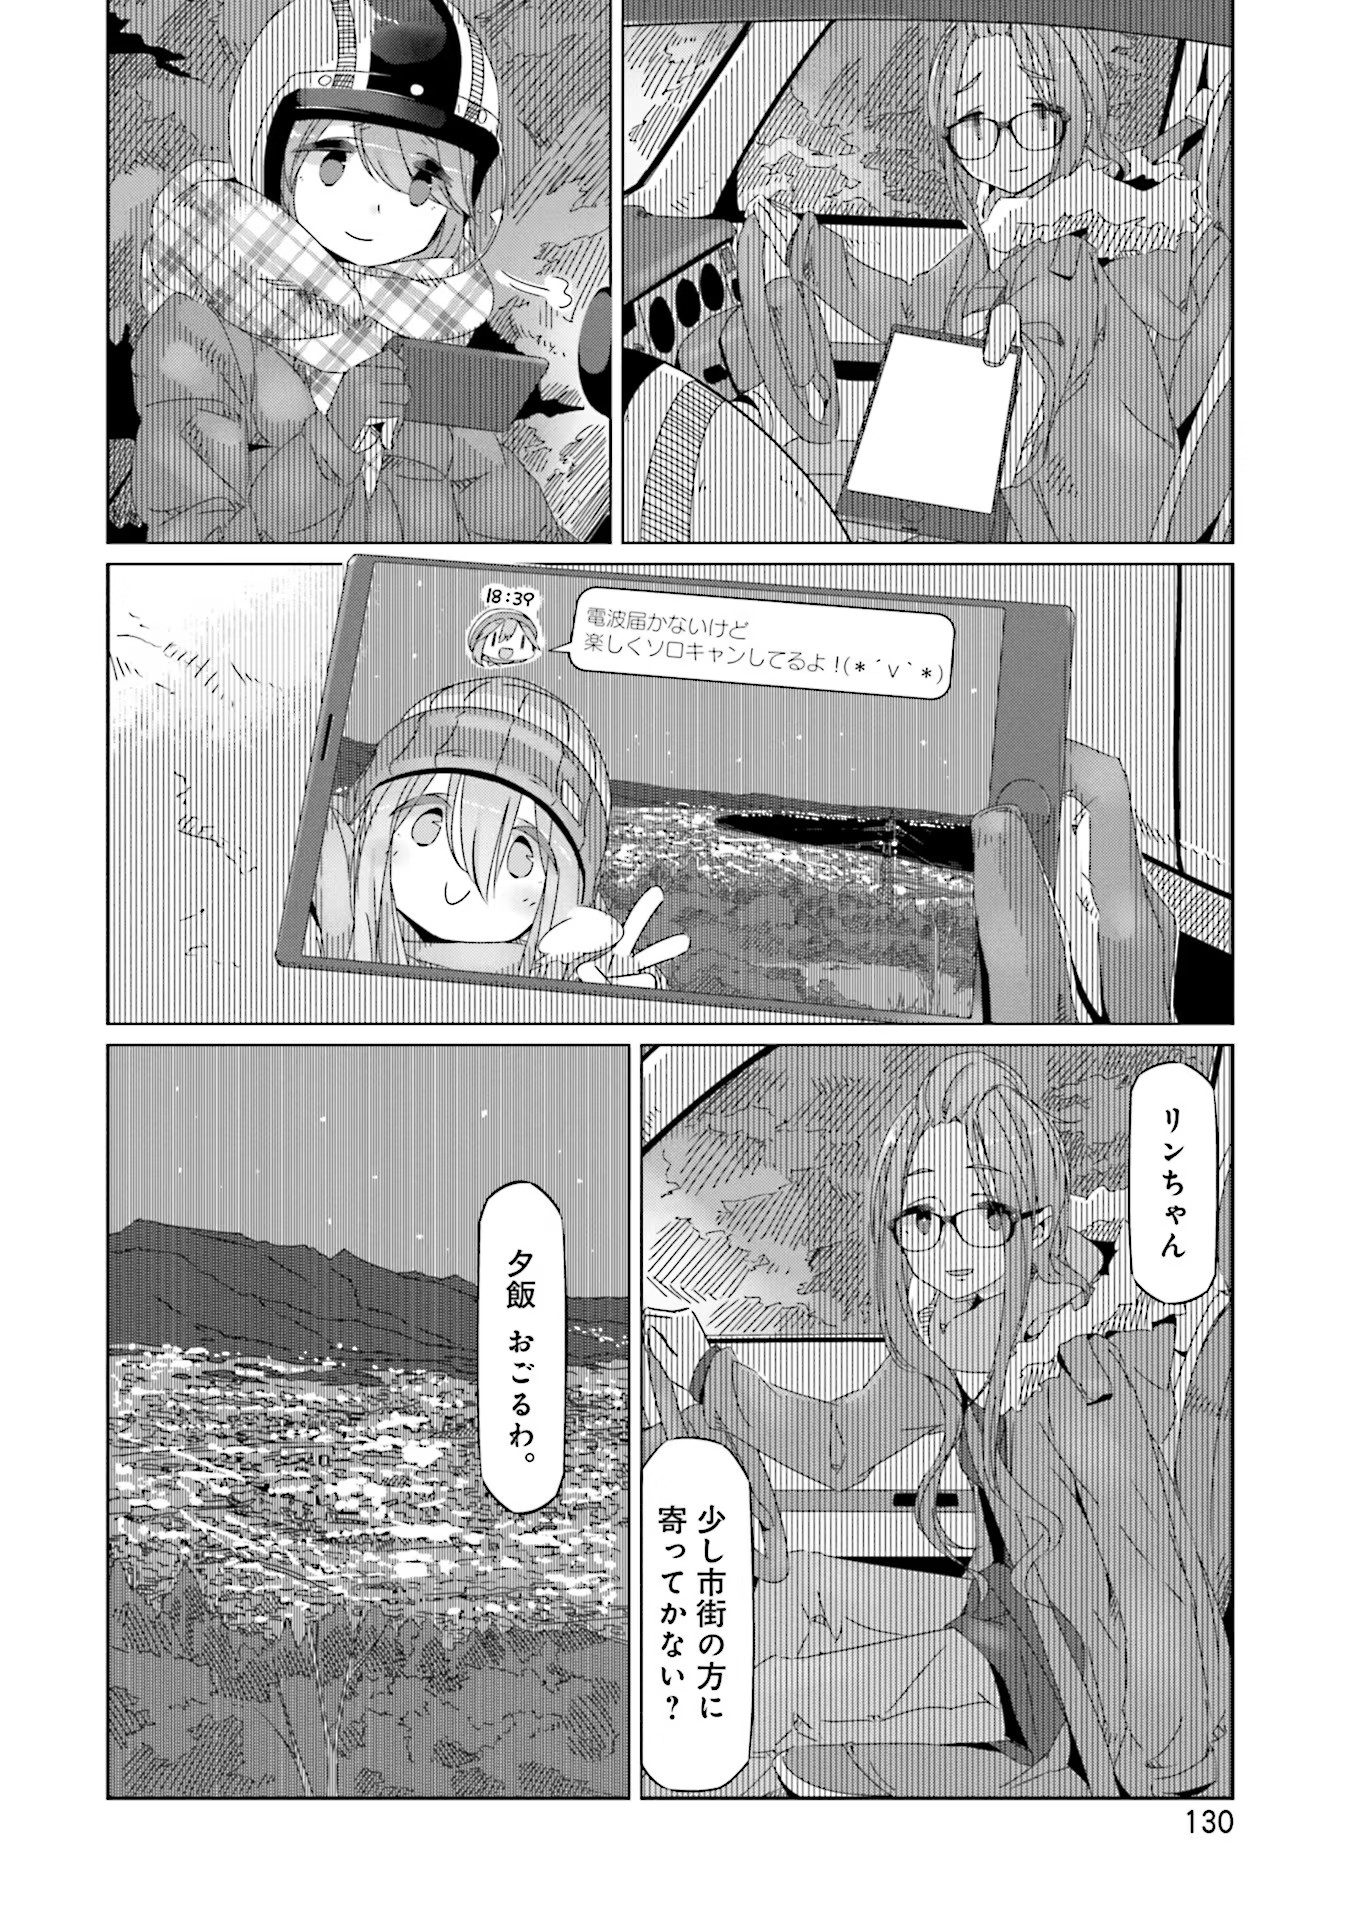 Yuru Camp - Chapter 39 - Page 24